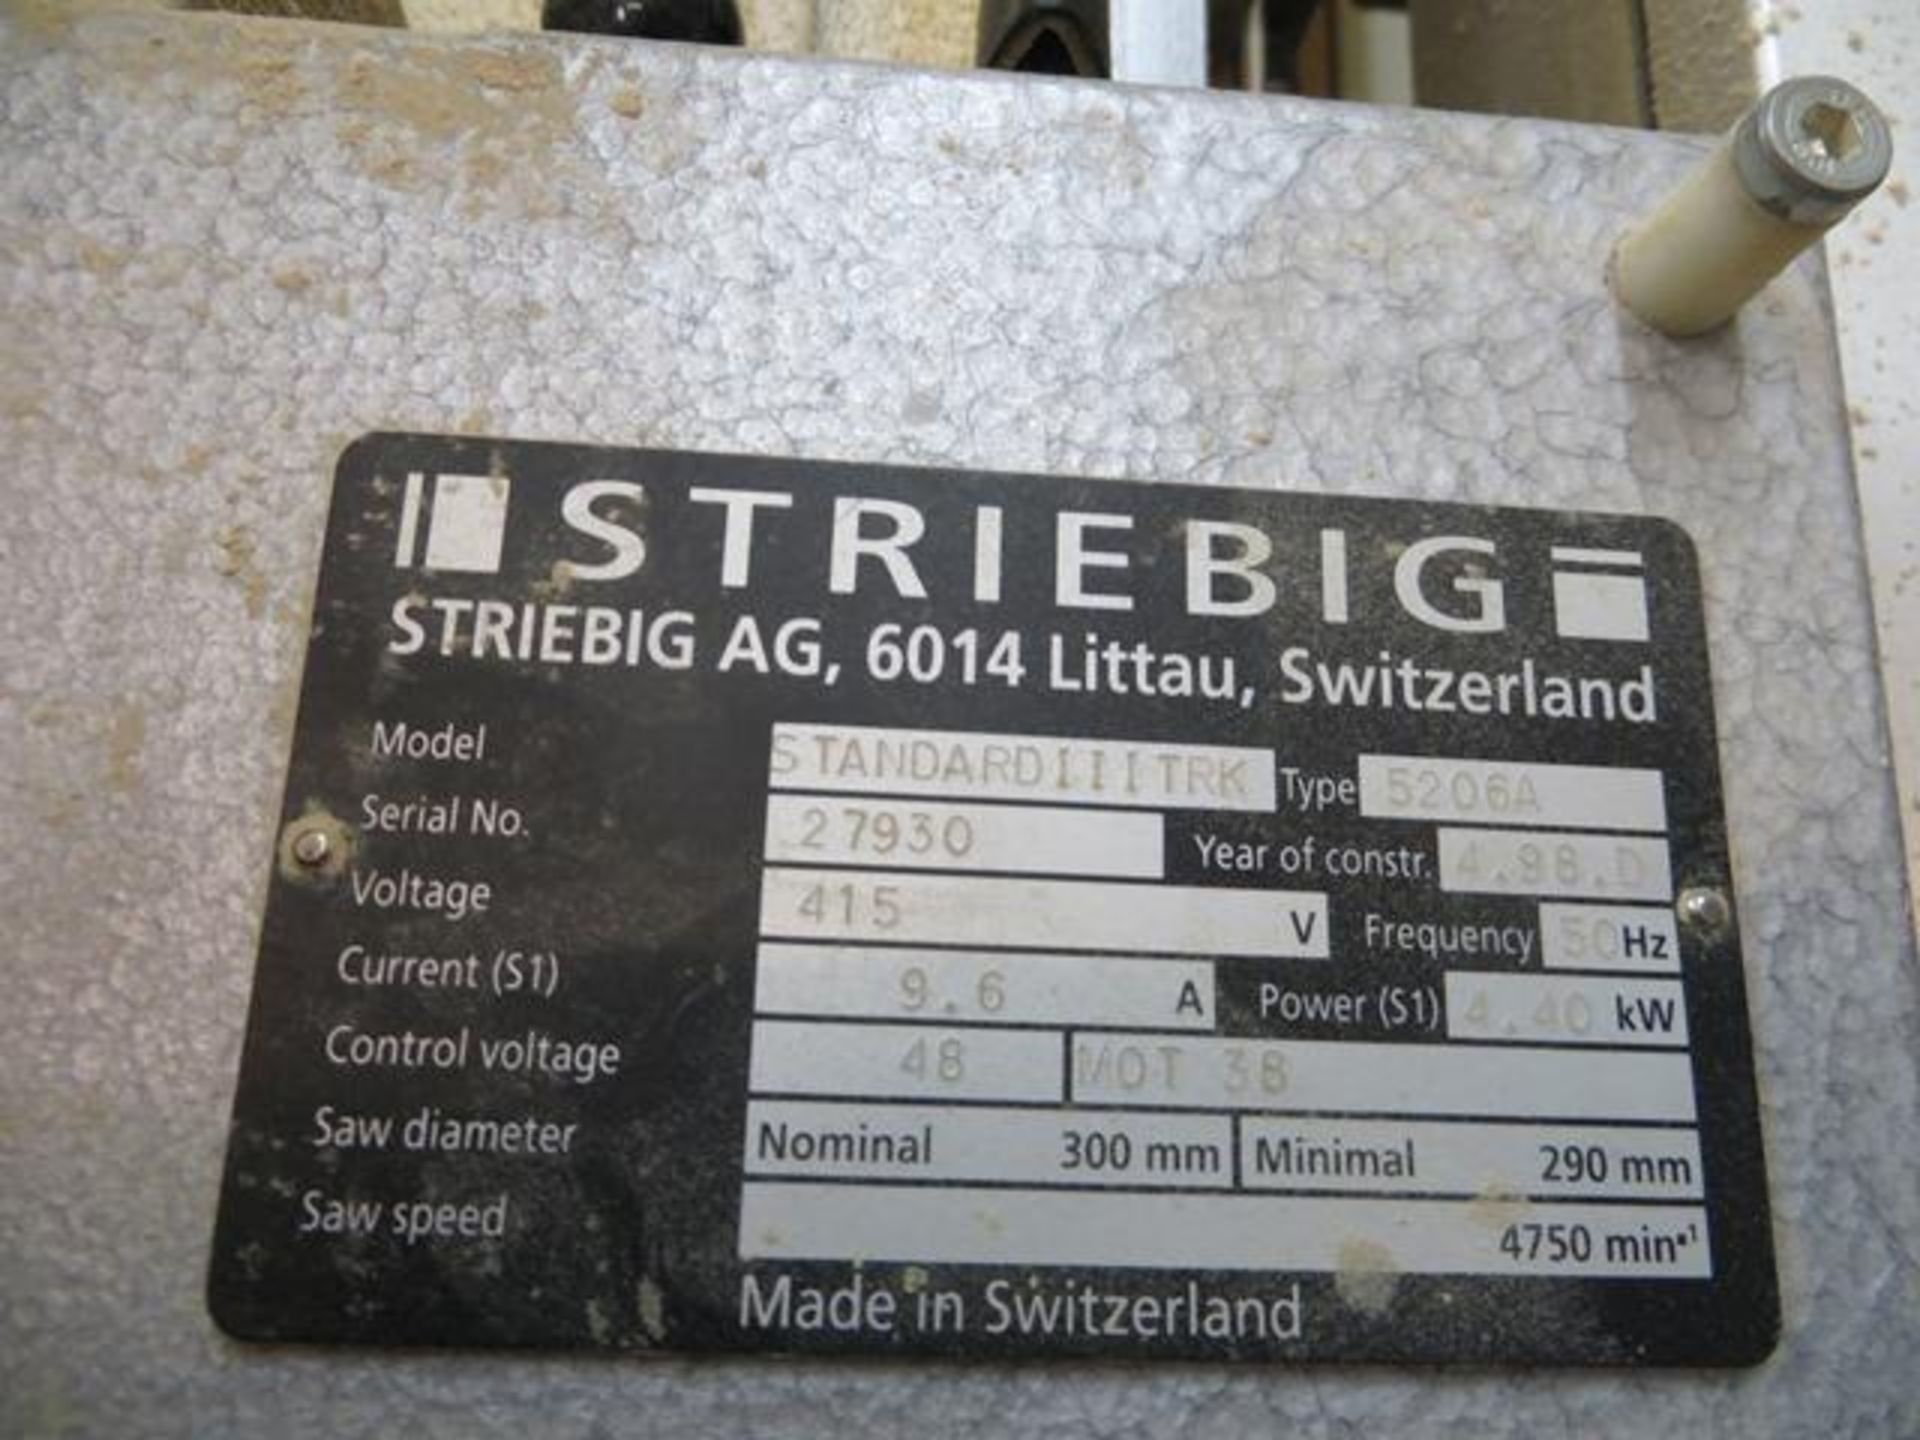 Striebig CH-6014 Littau standard III TRK type 38 3-phase 5m panel/wall saw (1998) - Image 6 of 7